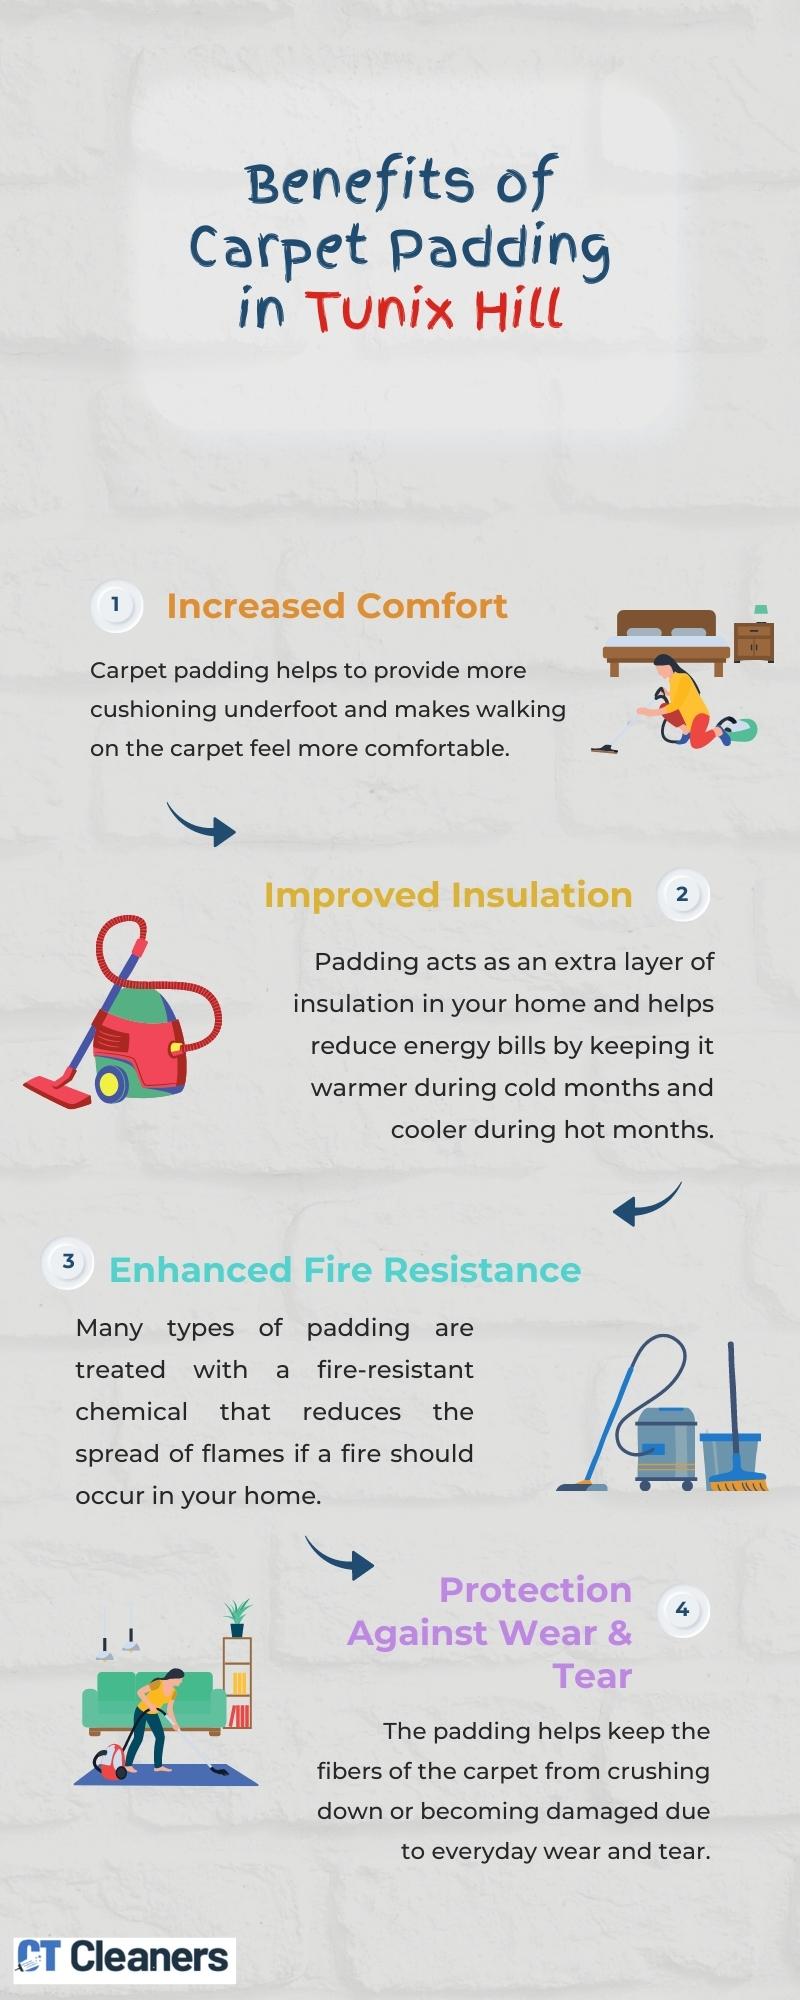 Benefits of Carpet Padding in Tunix Hill